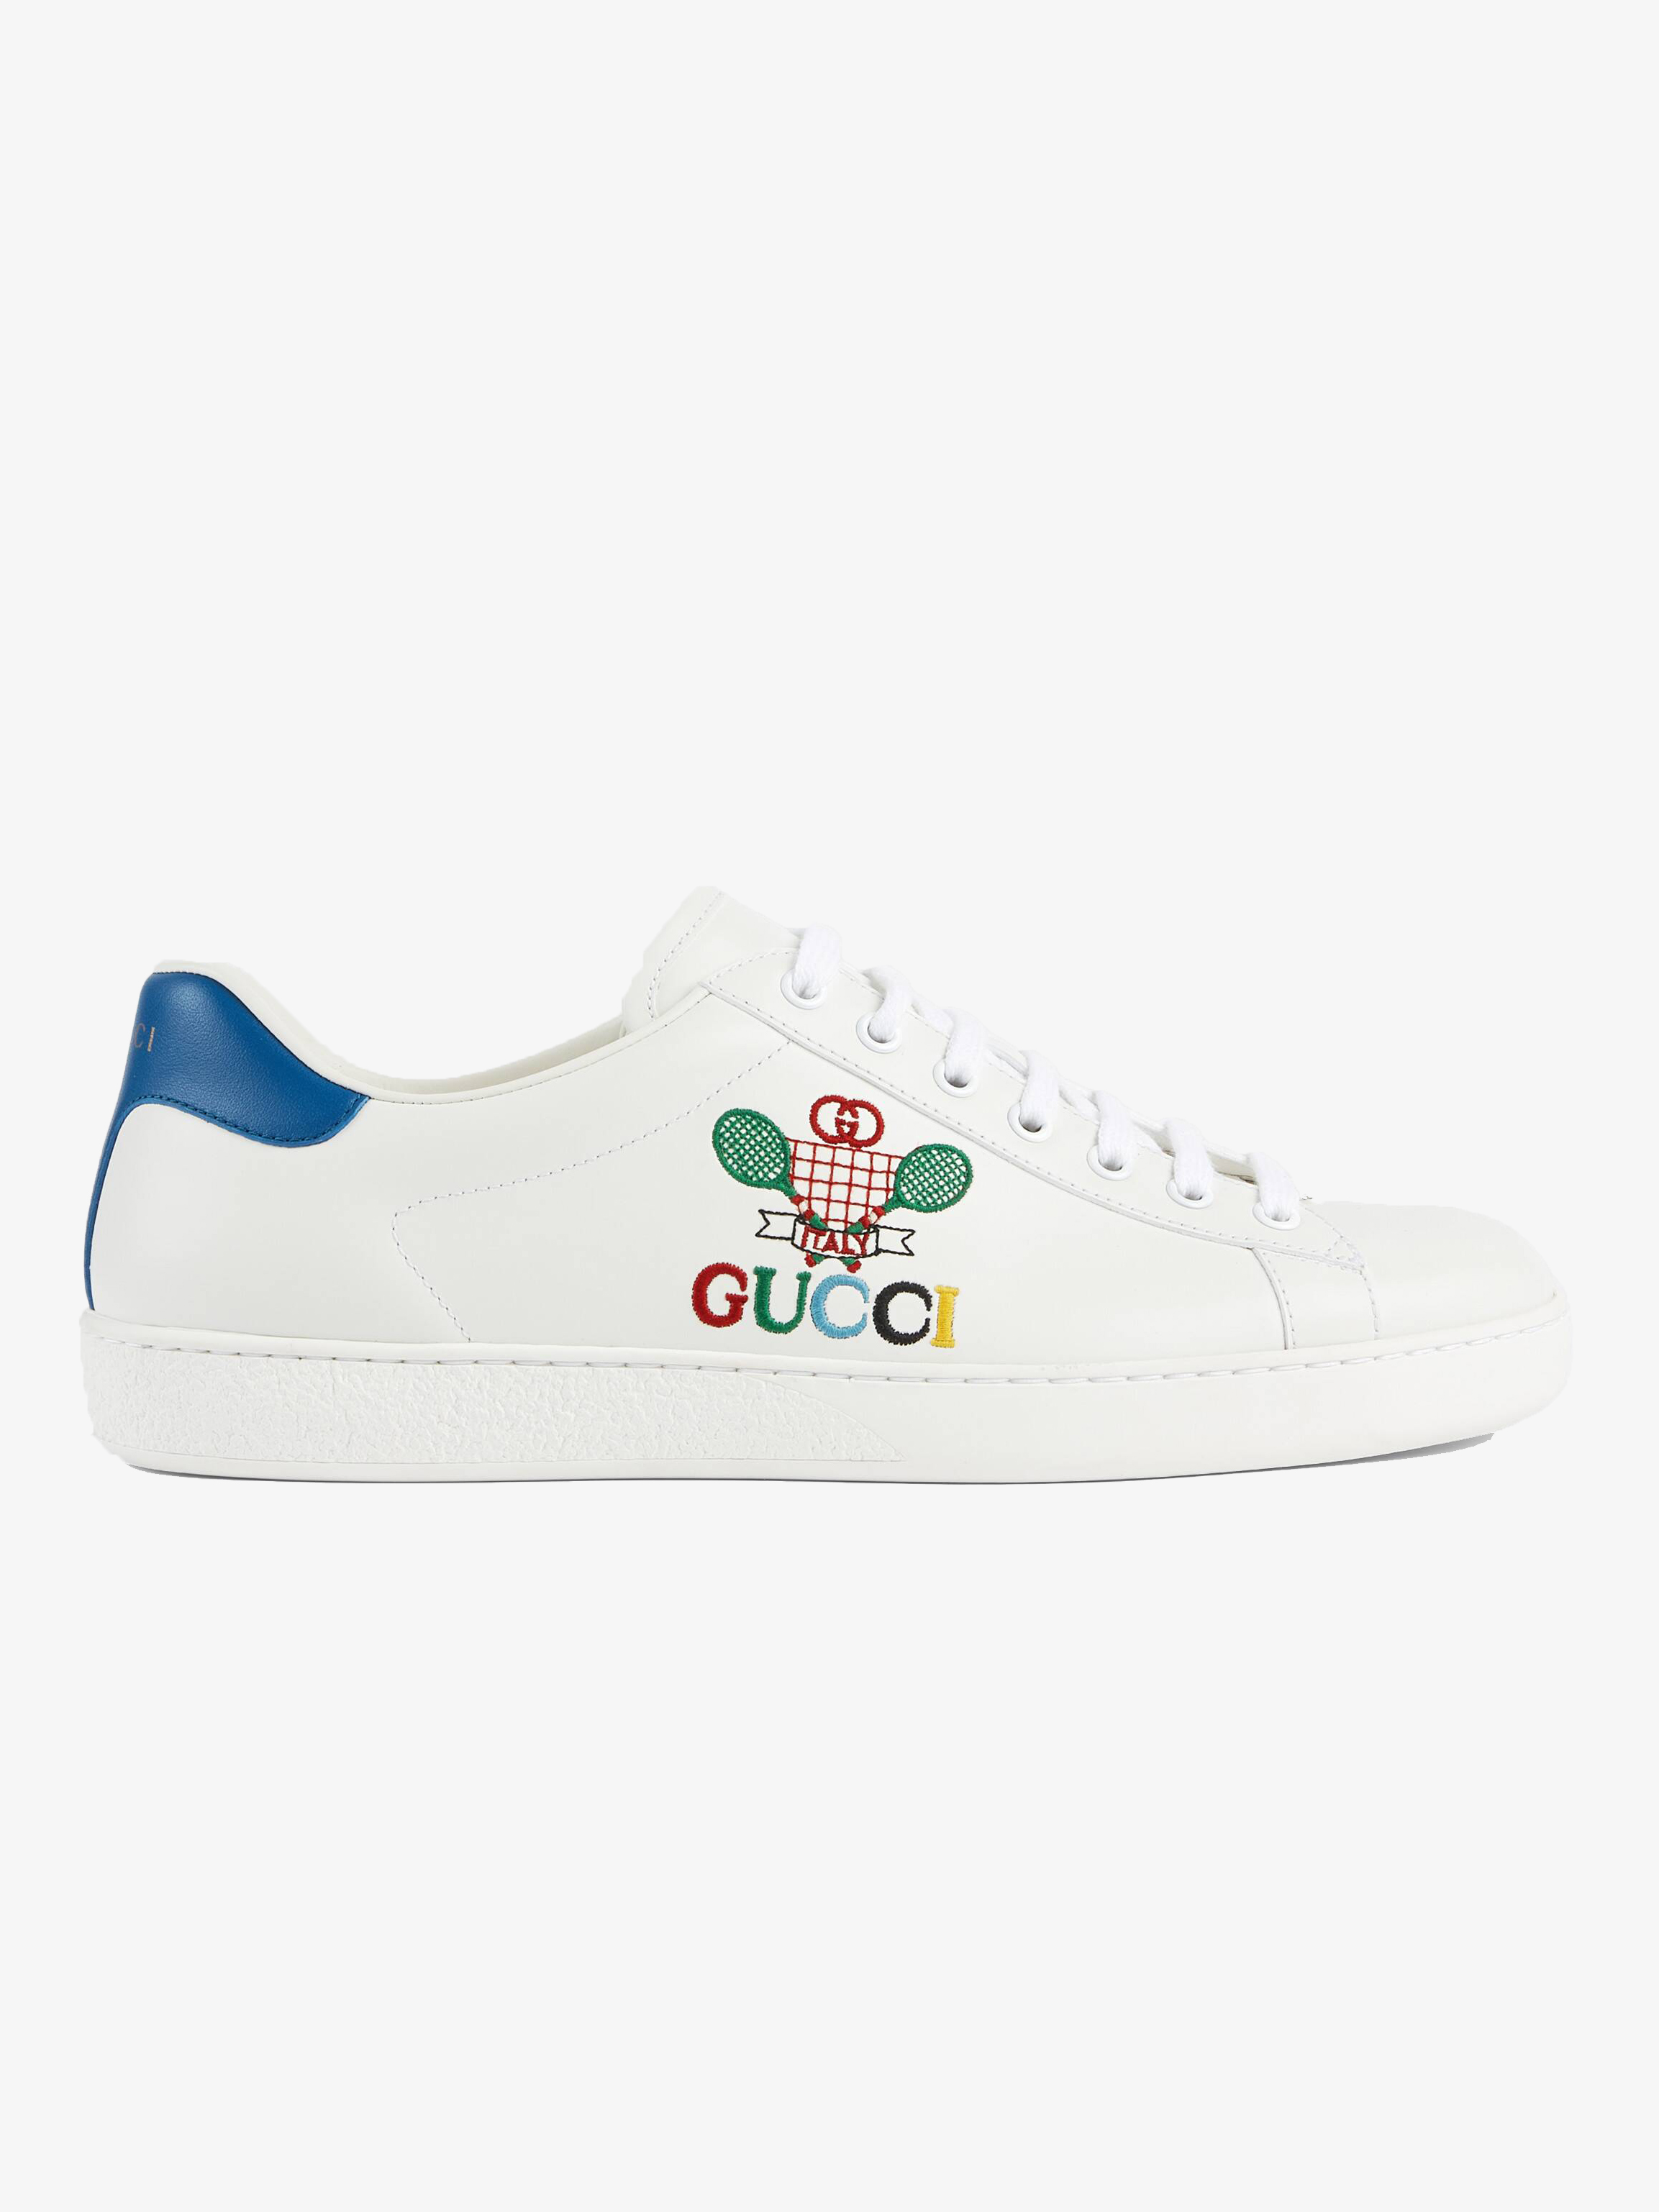 Gucci Ace Sneaker with Gucci Tennis - Kicks Galeria